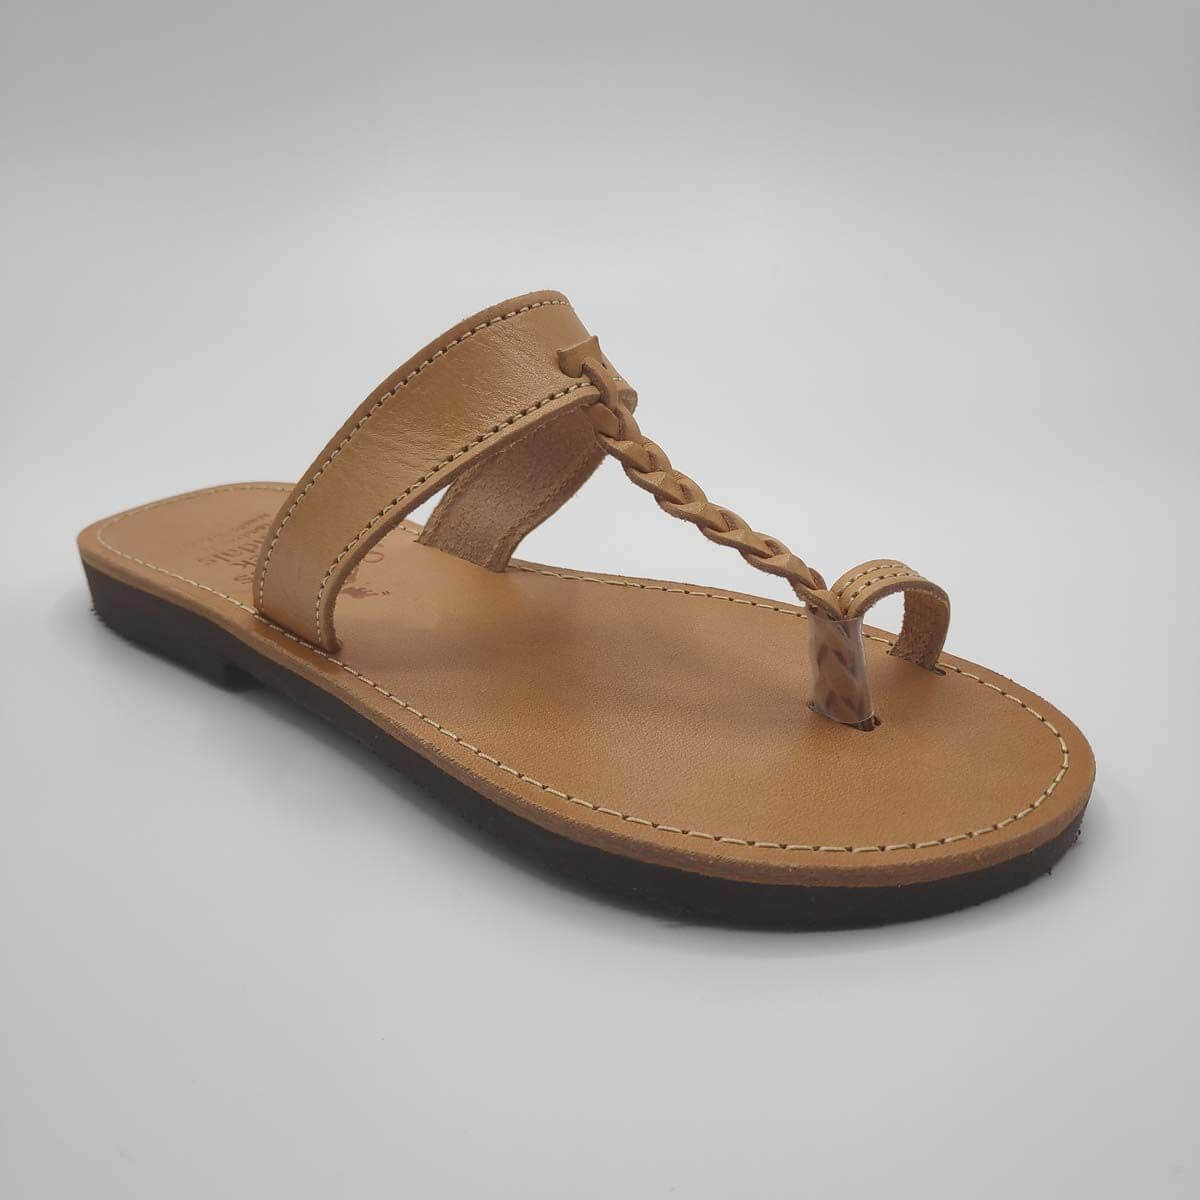 MIKRI VIGLA thong sandals | Pagonis Greek Sandals